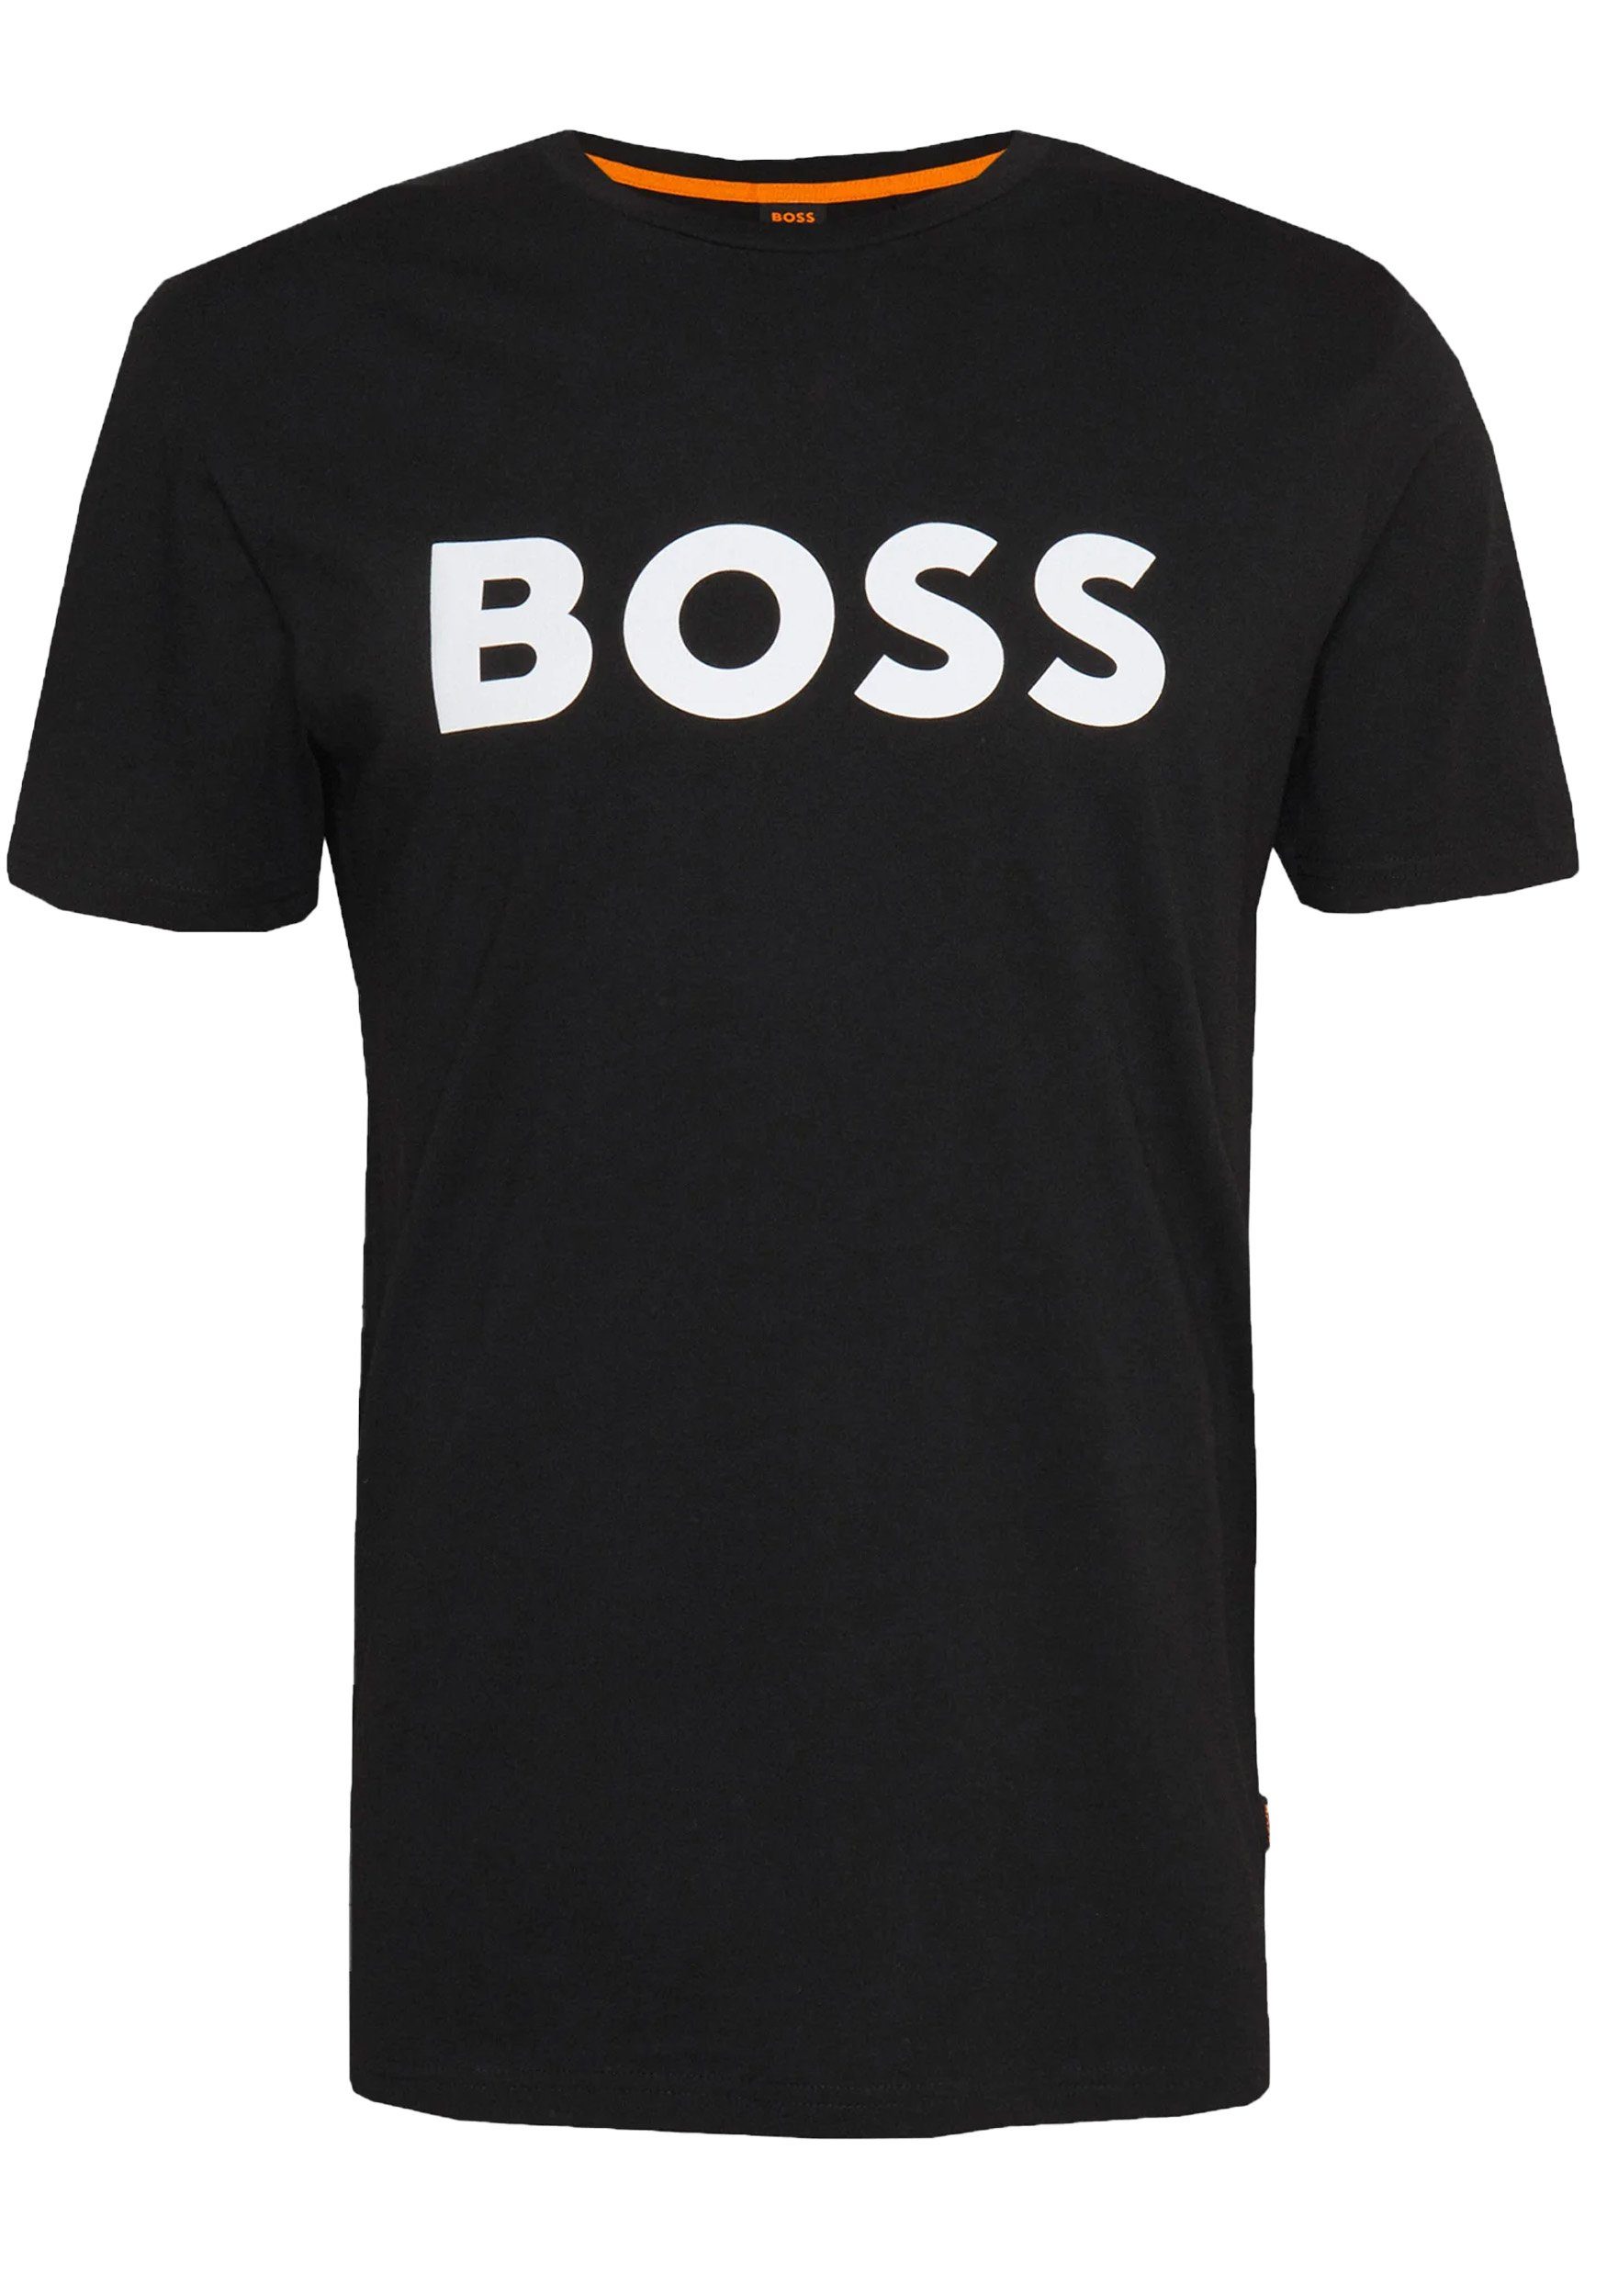 BOSS T-Shirt Thinking Hugo Boss Herren Shirt mit Logo Print mit Kontrast Detail